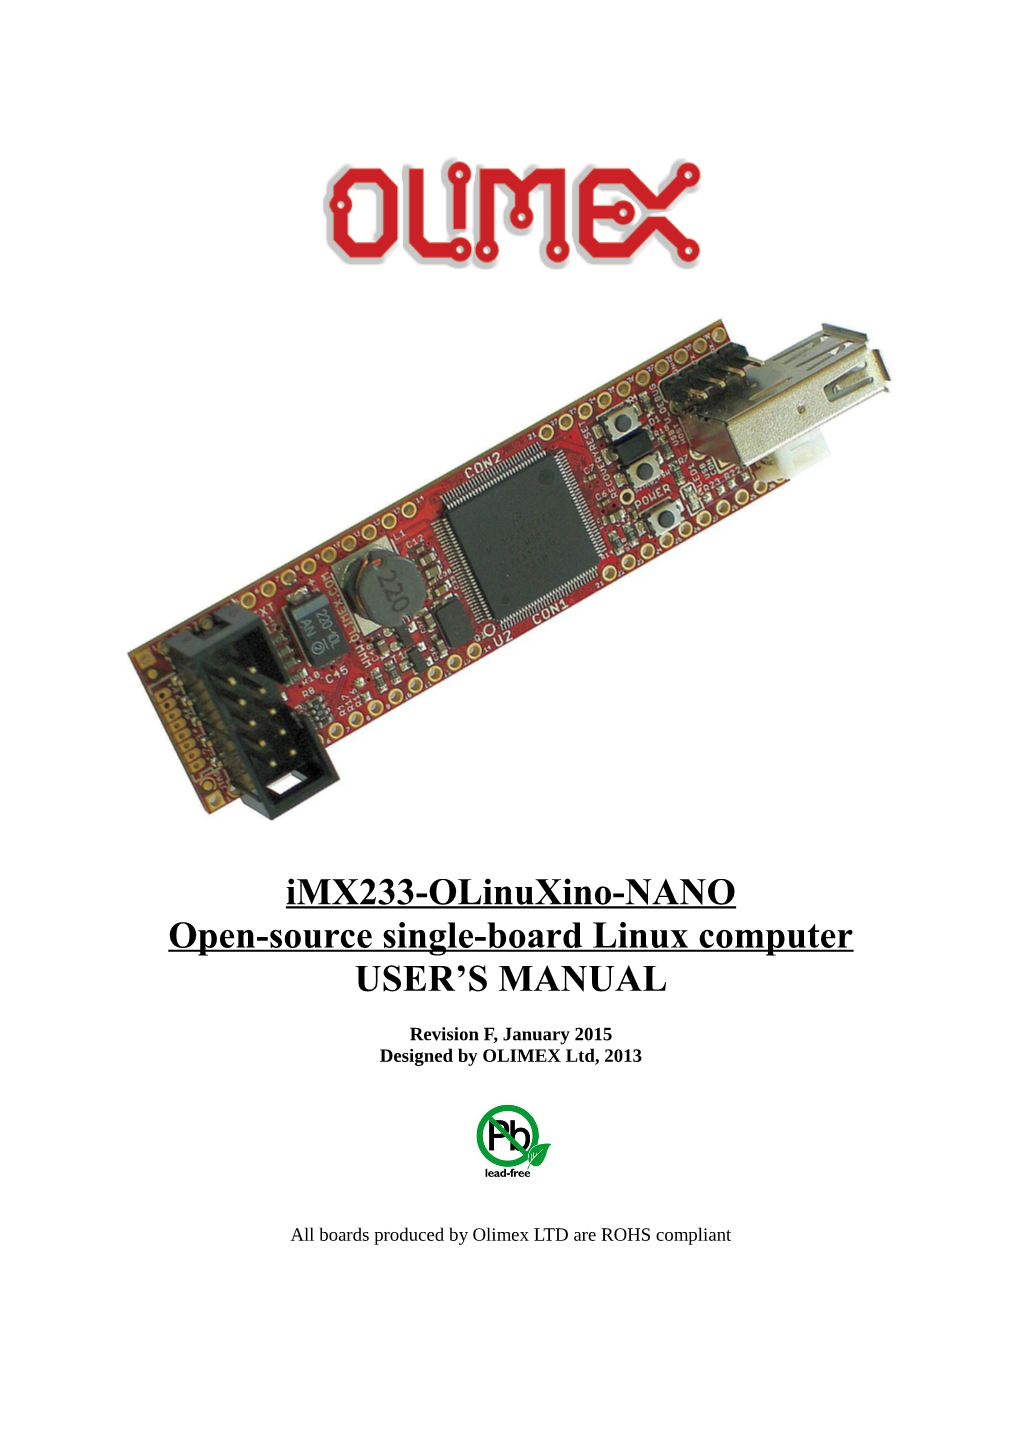 Imx233-Olinuxino-NANO Open-Source Single-Board Linux Computer USER’S MANUAL